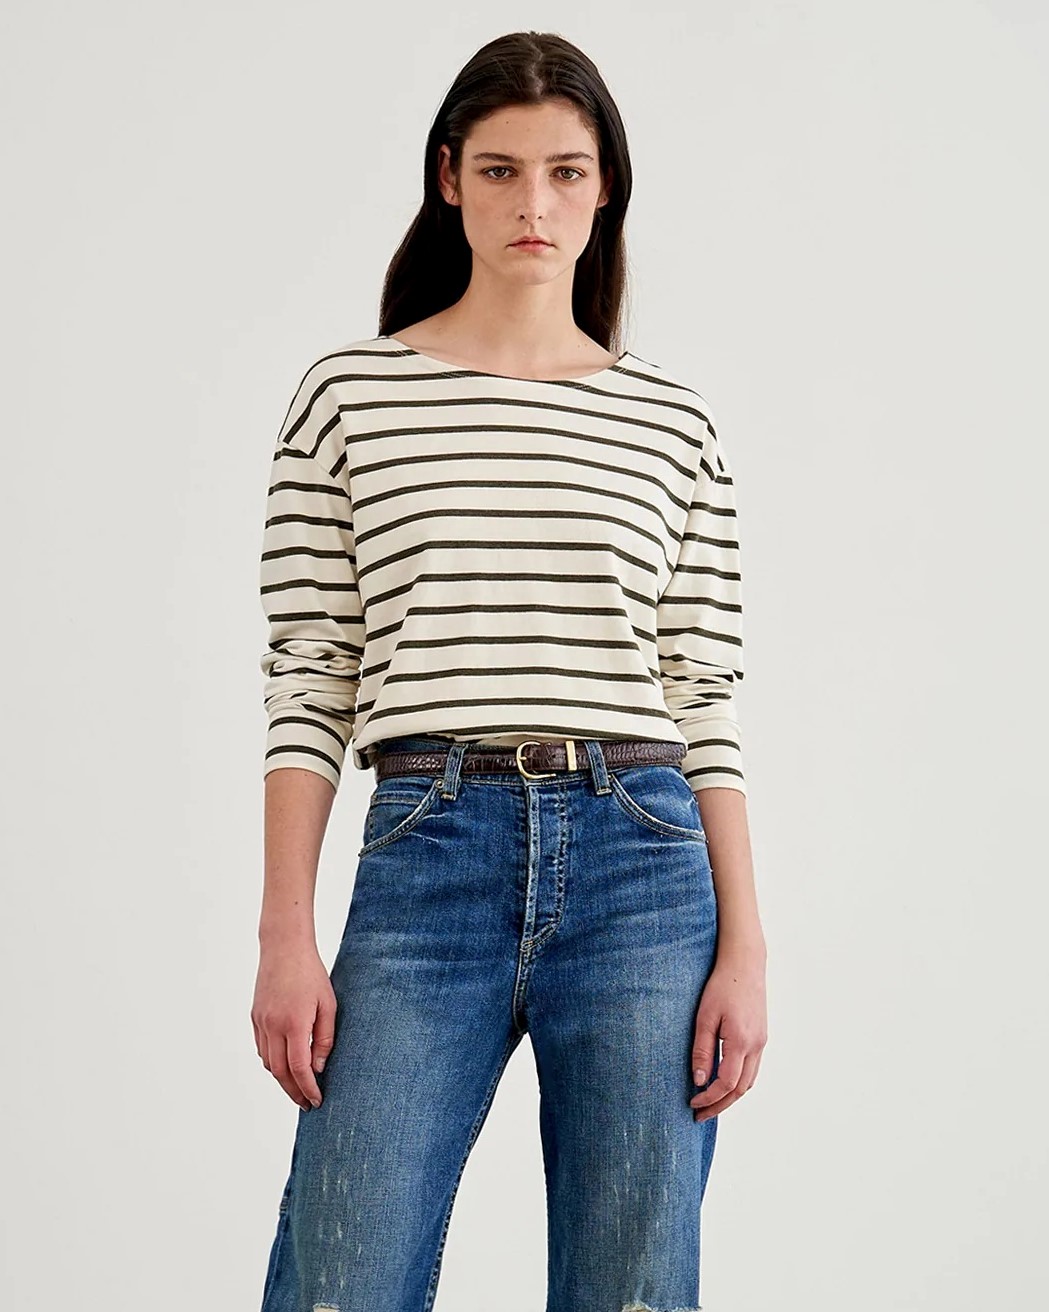 Nili Lotan Arlette Longsleeve Sweater in Olive Stripes M